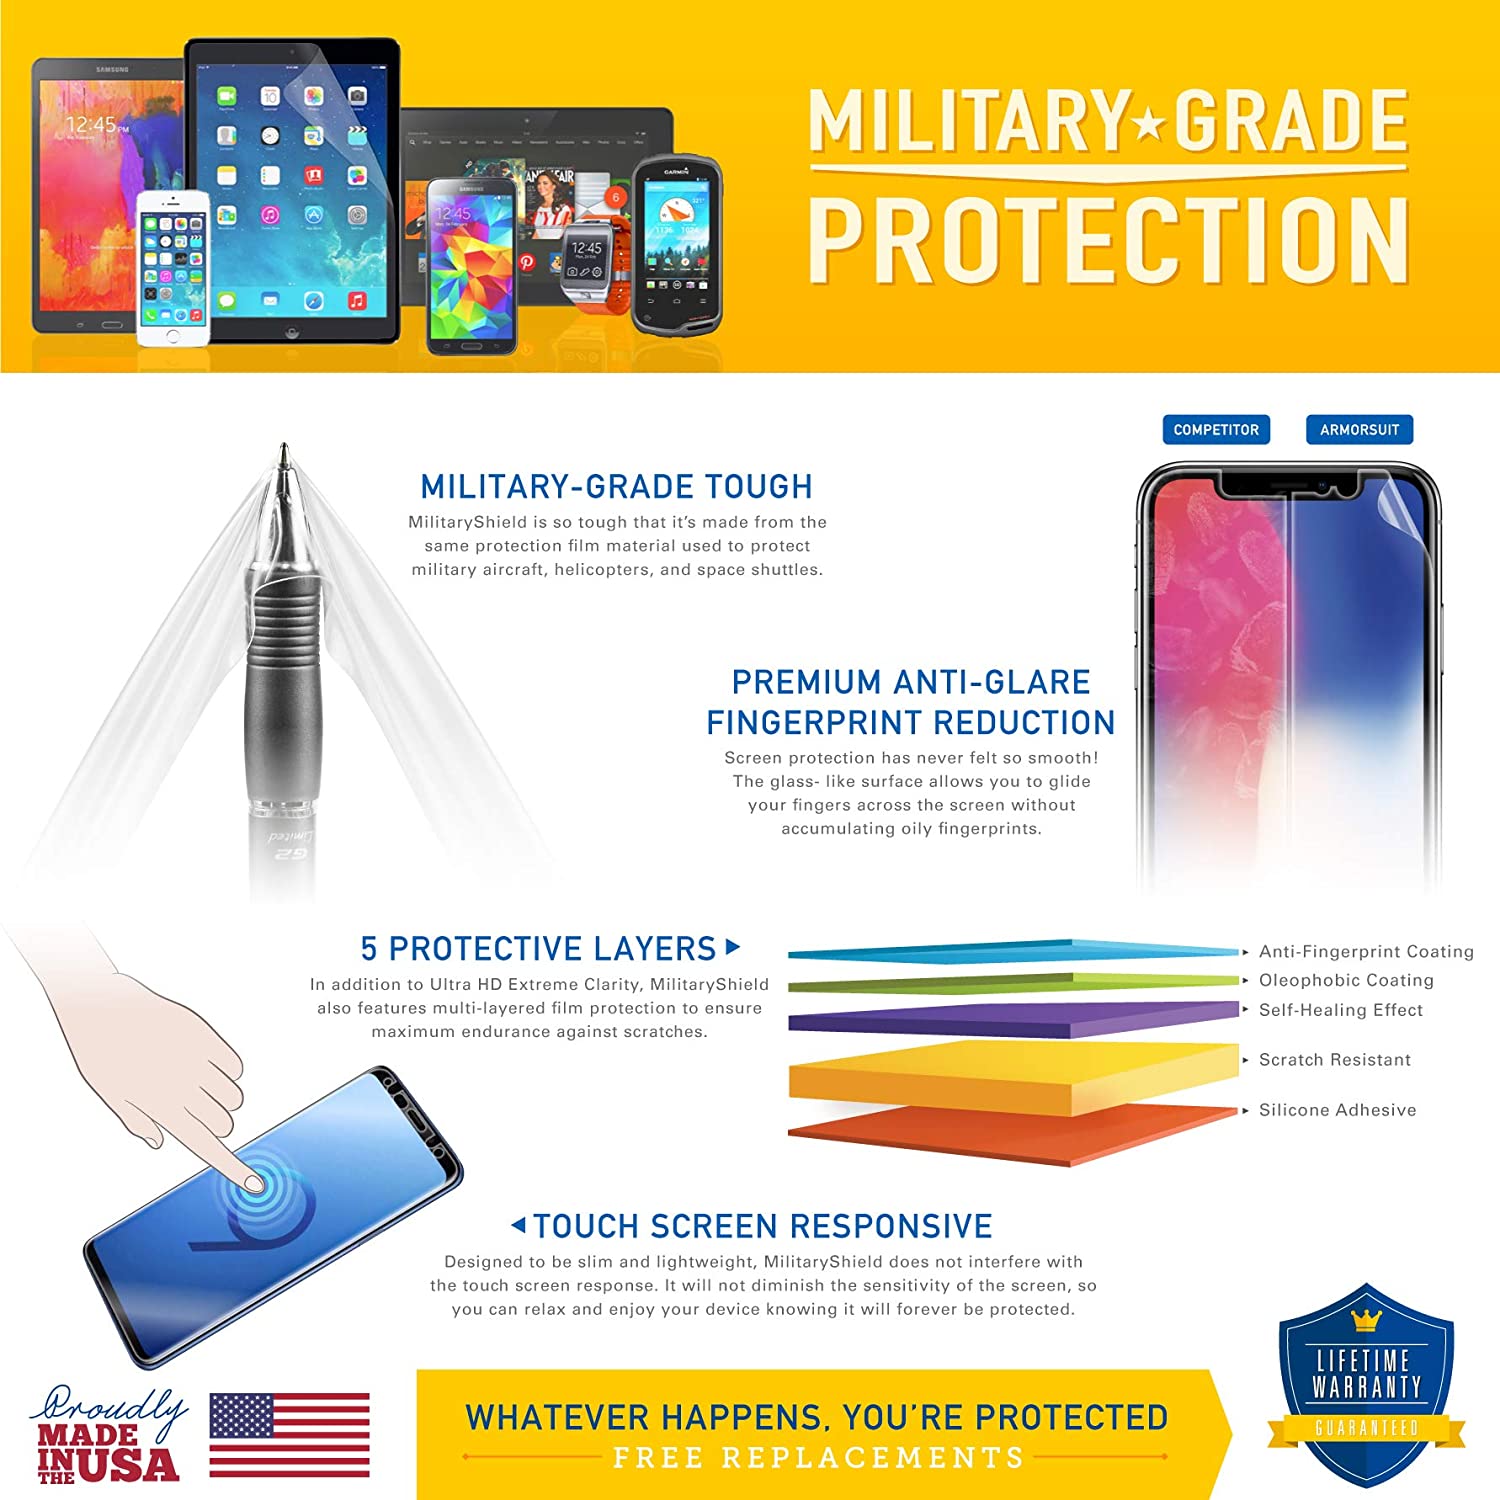 Samsung Galaxy Note II Screen Protector + Carbon Fiber Skin Protector